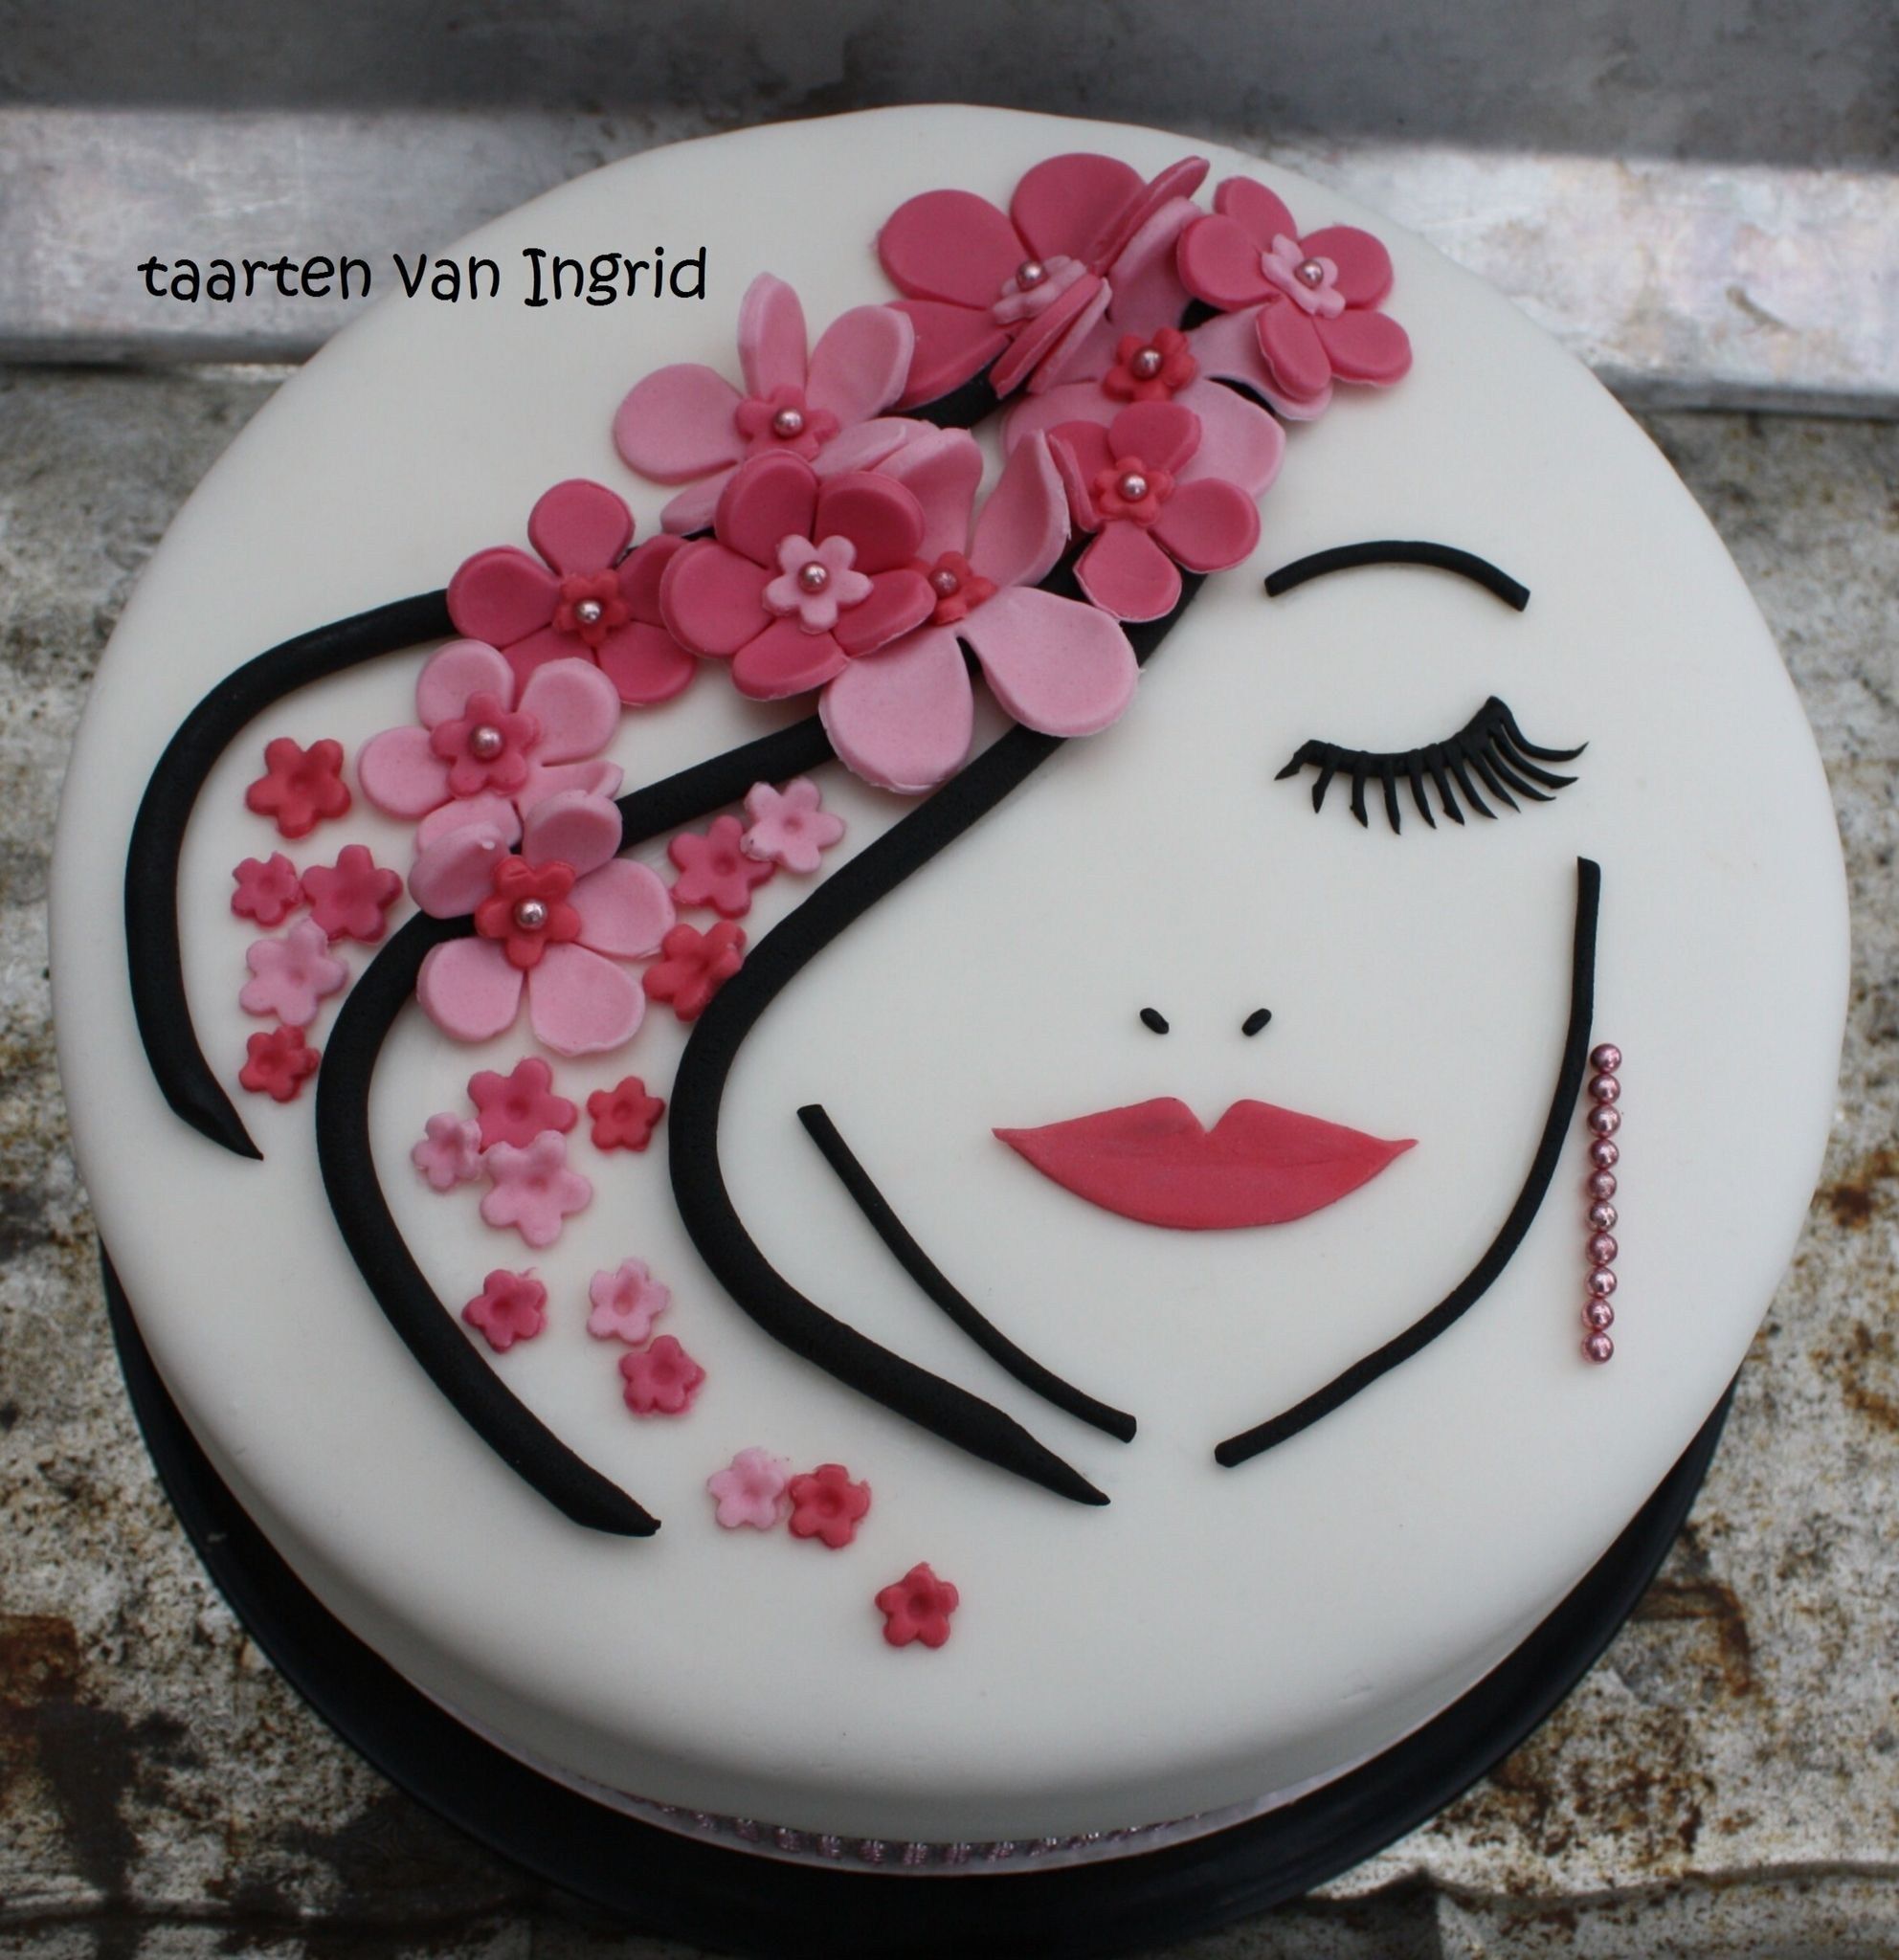 12 cake Designs birthday ideas